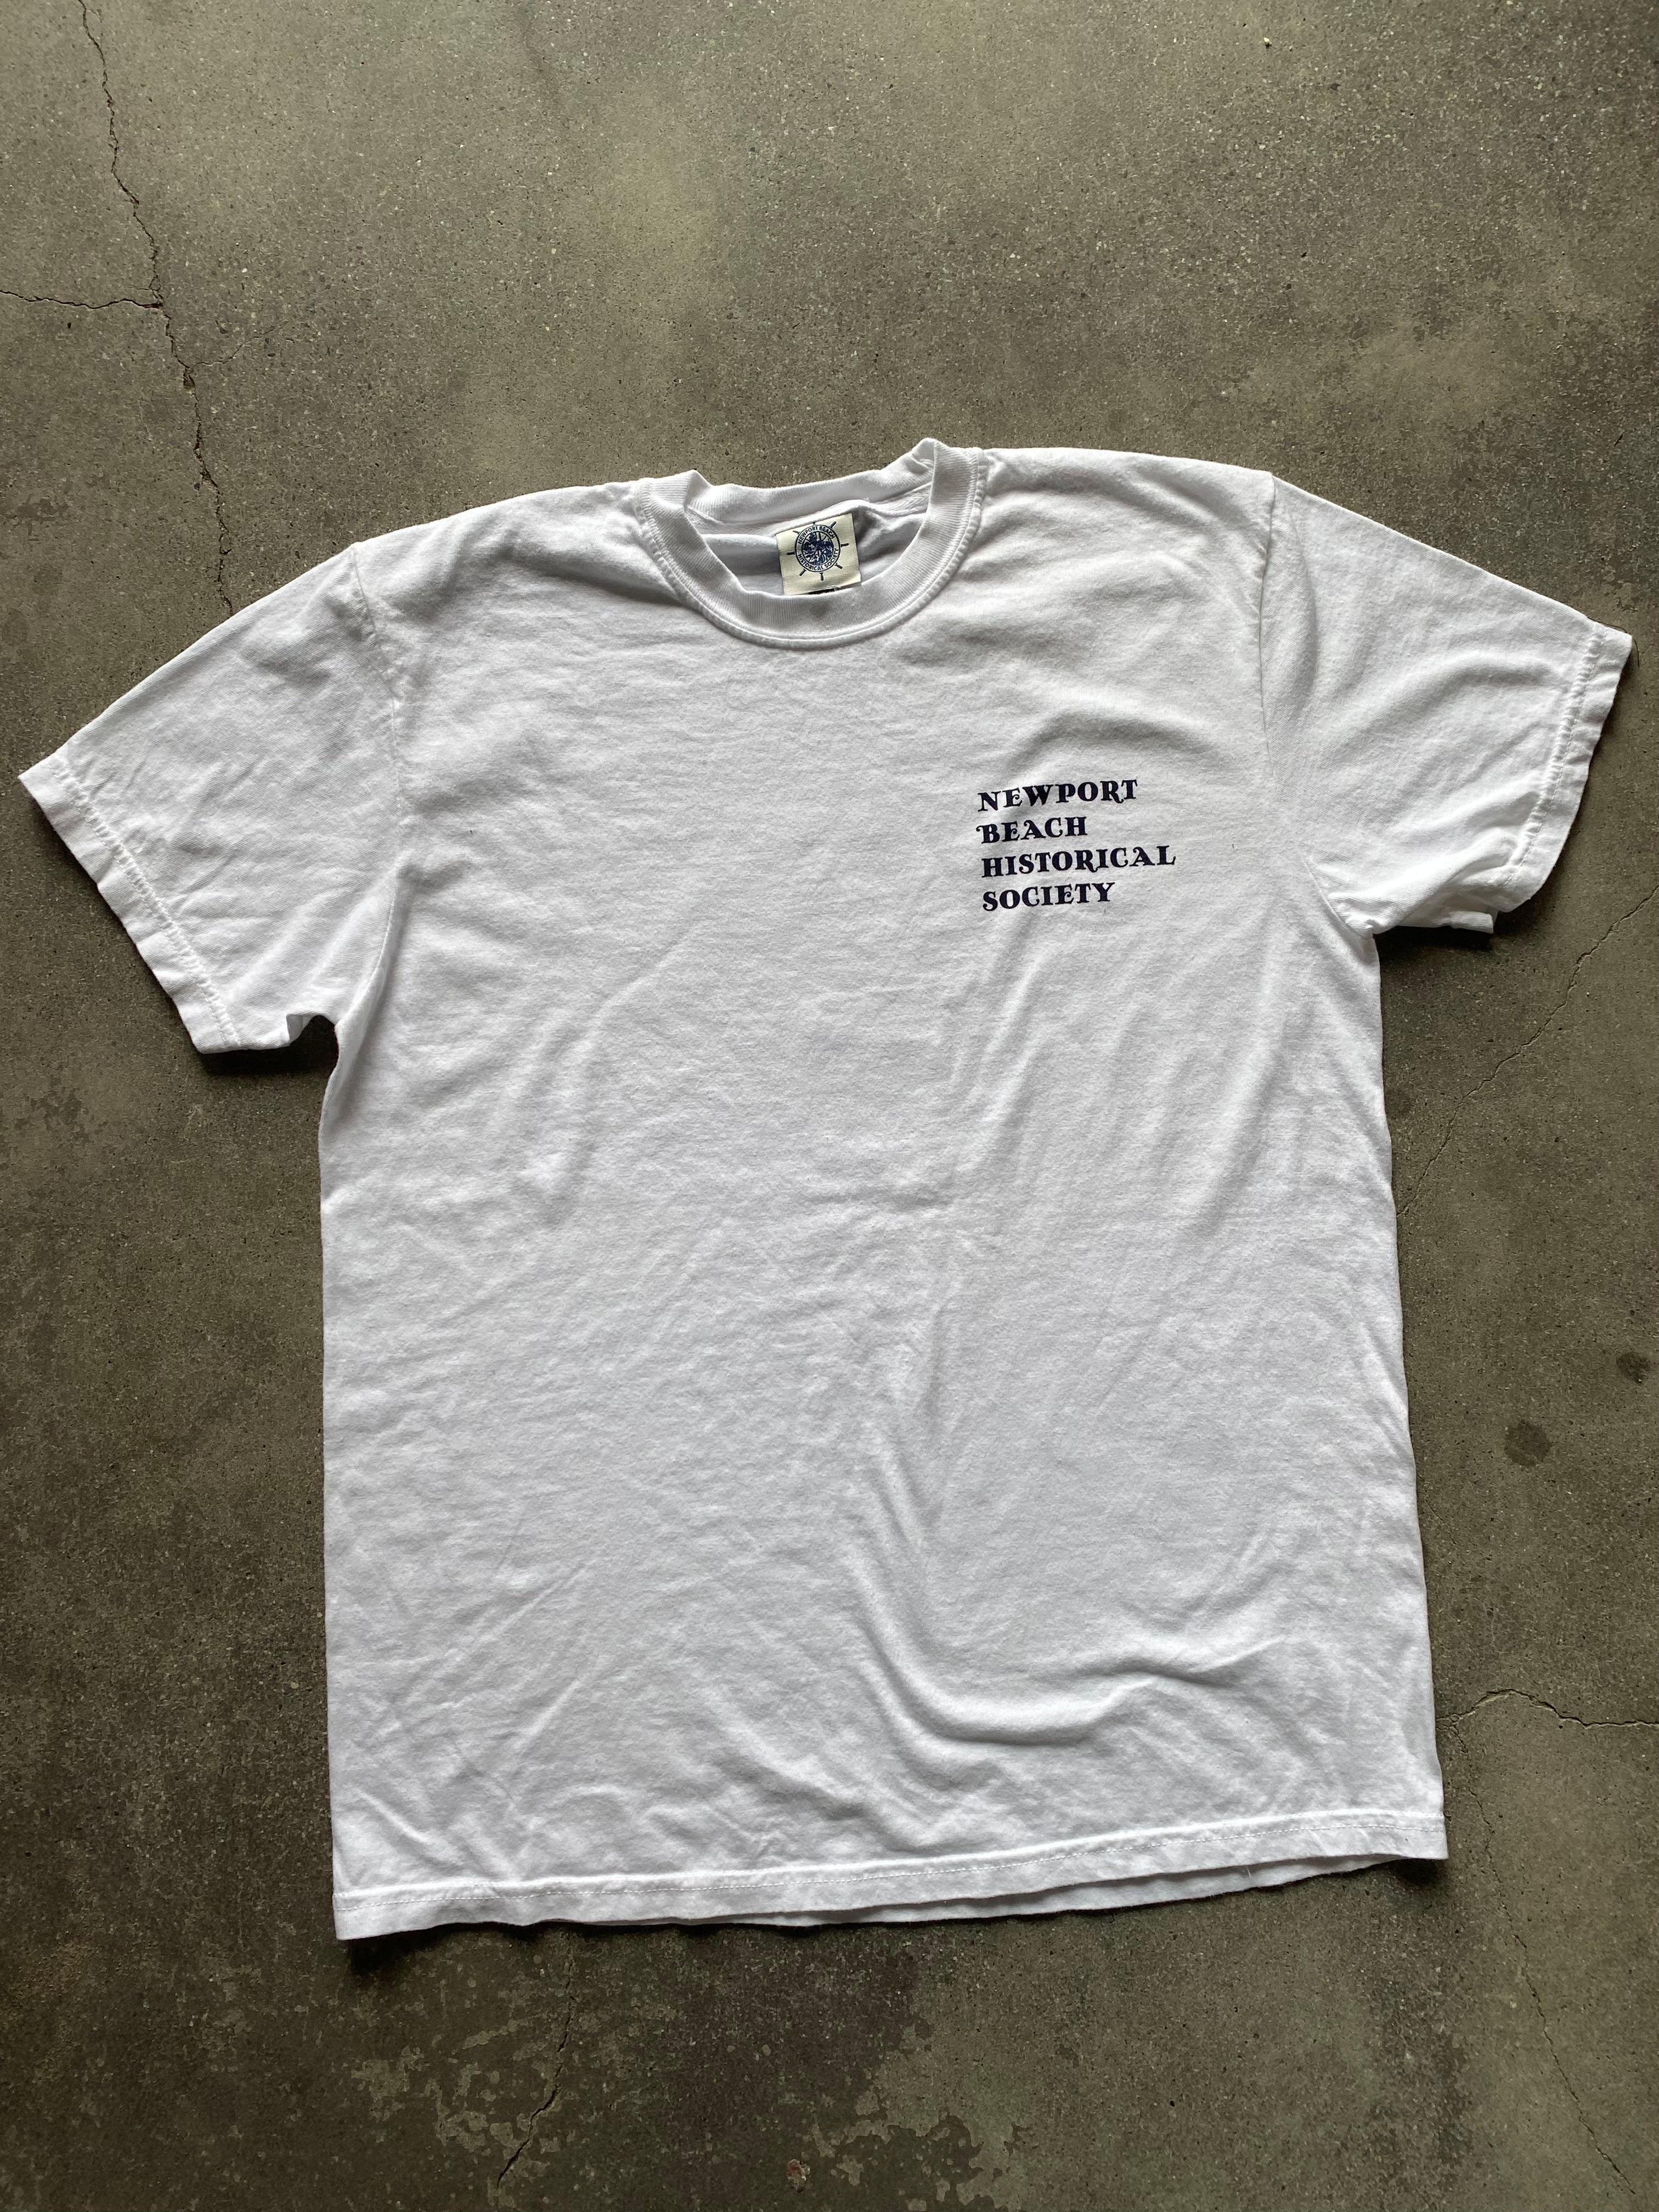 Newport Beach Historical Society Short Sleeve T-Shirt WHITE